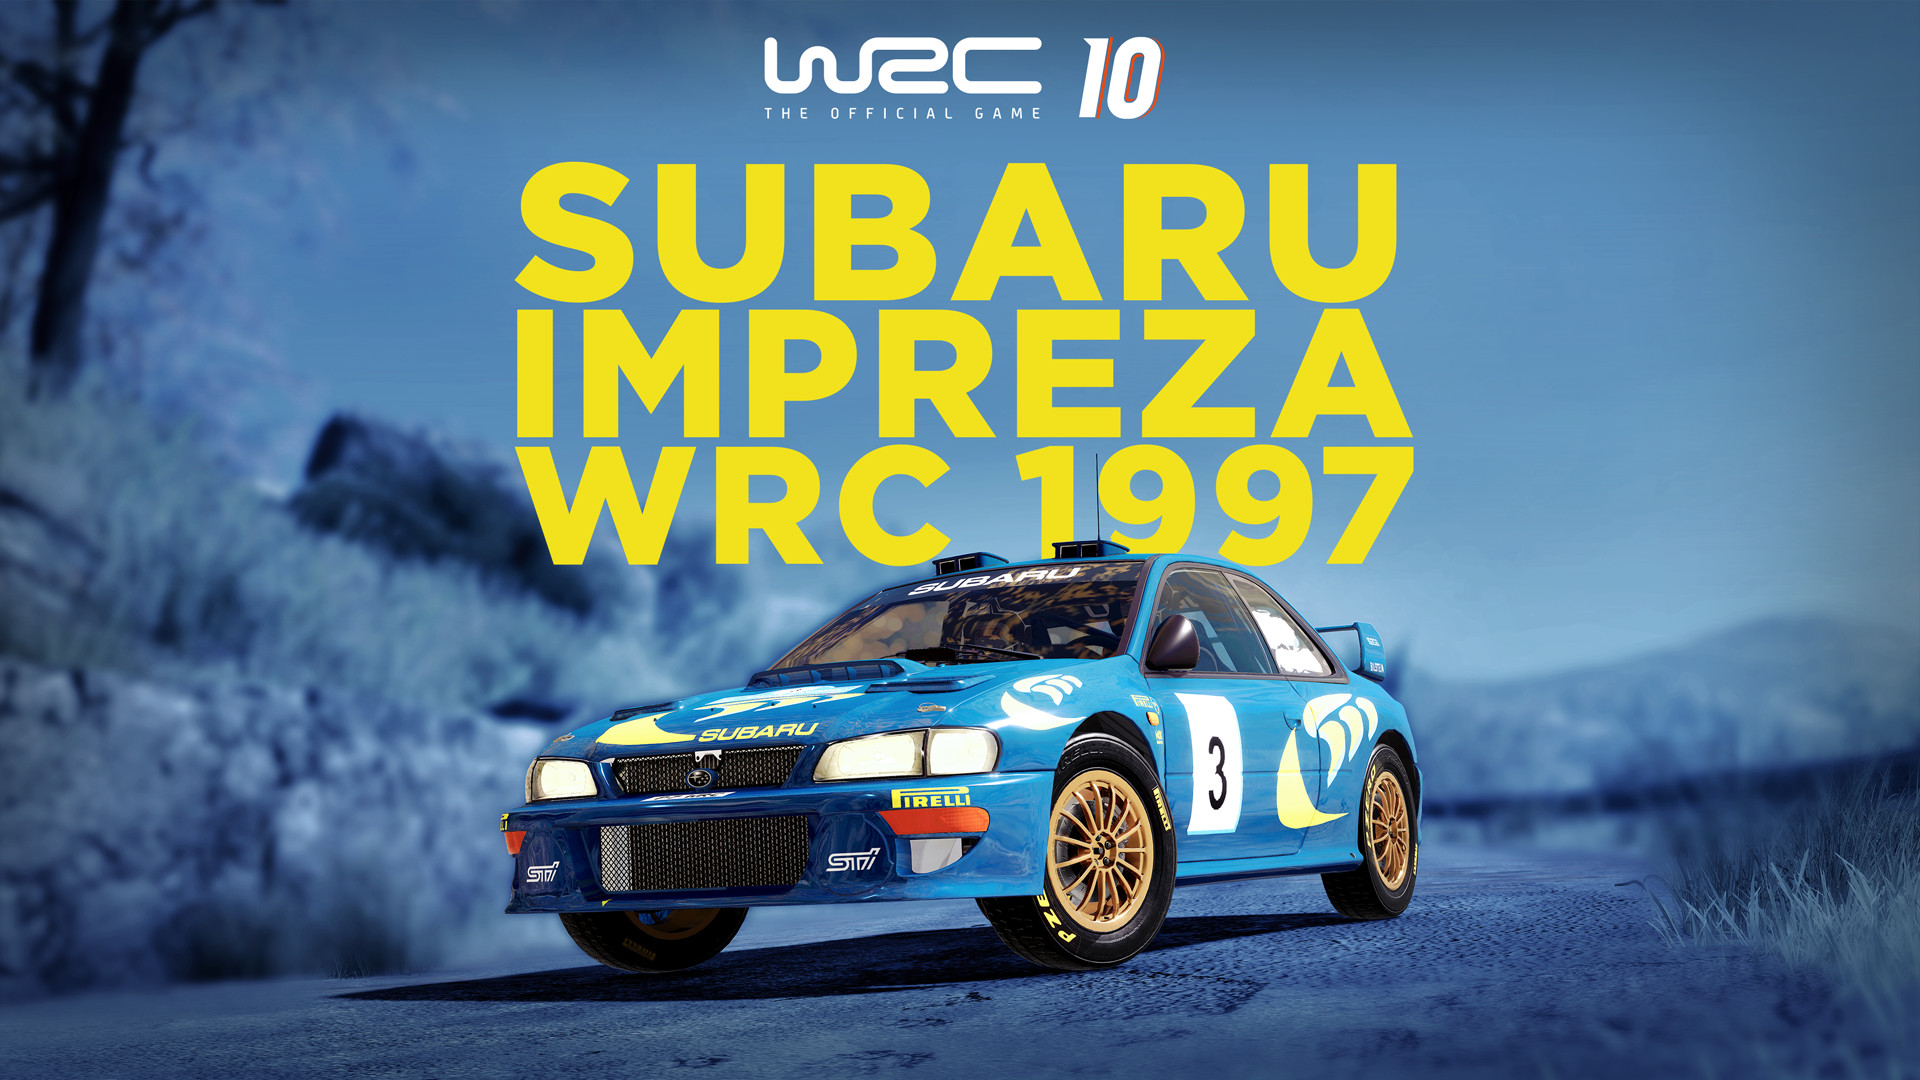 WRC 10 - Subaru Impreza WRC 1997 DLC Steam CD Key [USD 3.33]